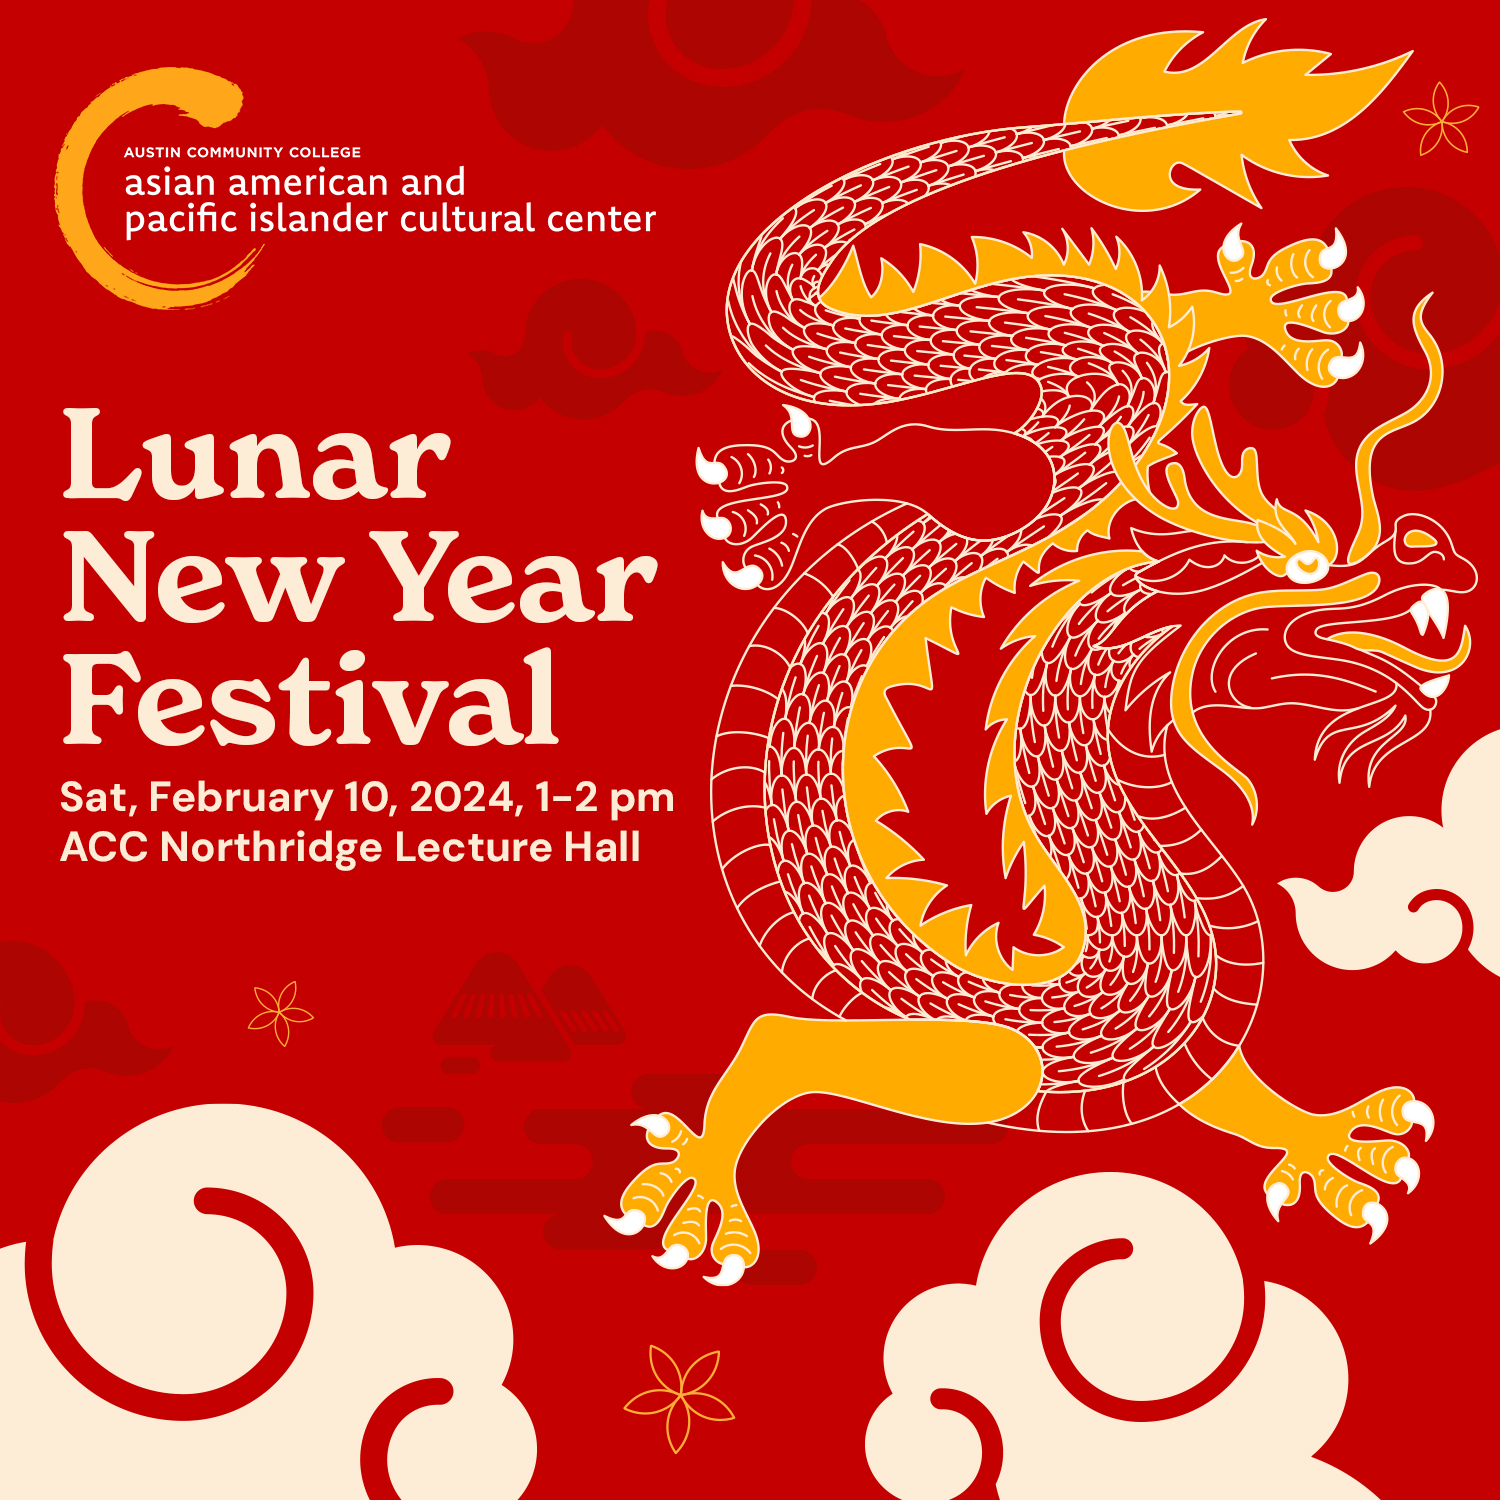 Lunar New Year Festival, Saturday, February 10, 2024, 1-2 pm, ACC Northridge Lecture Hall